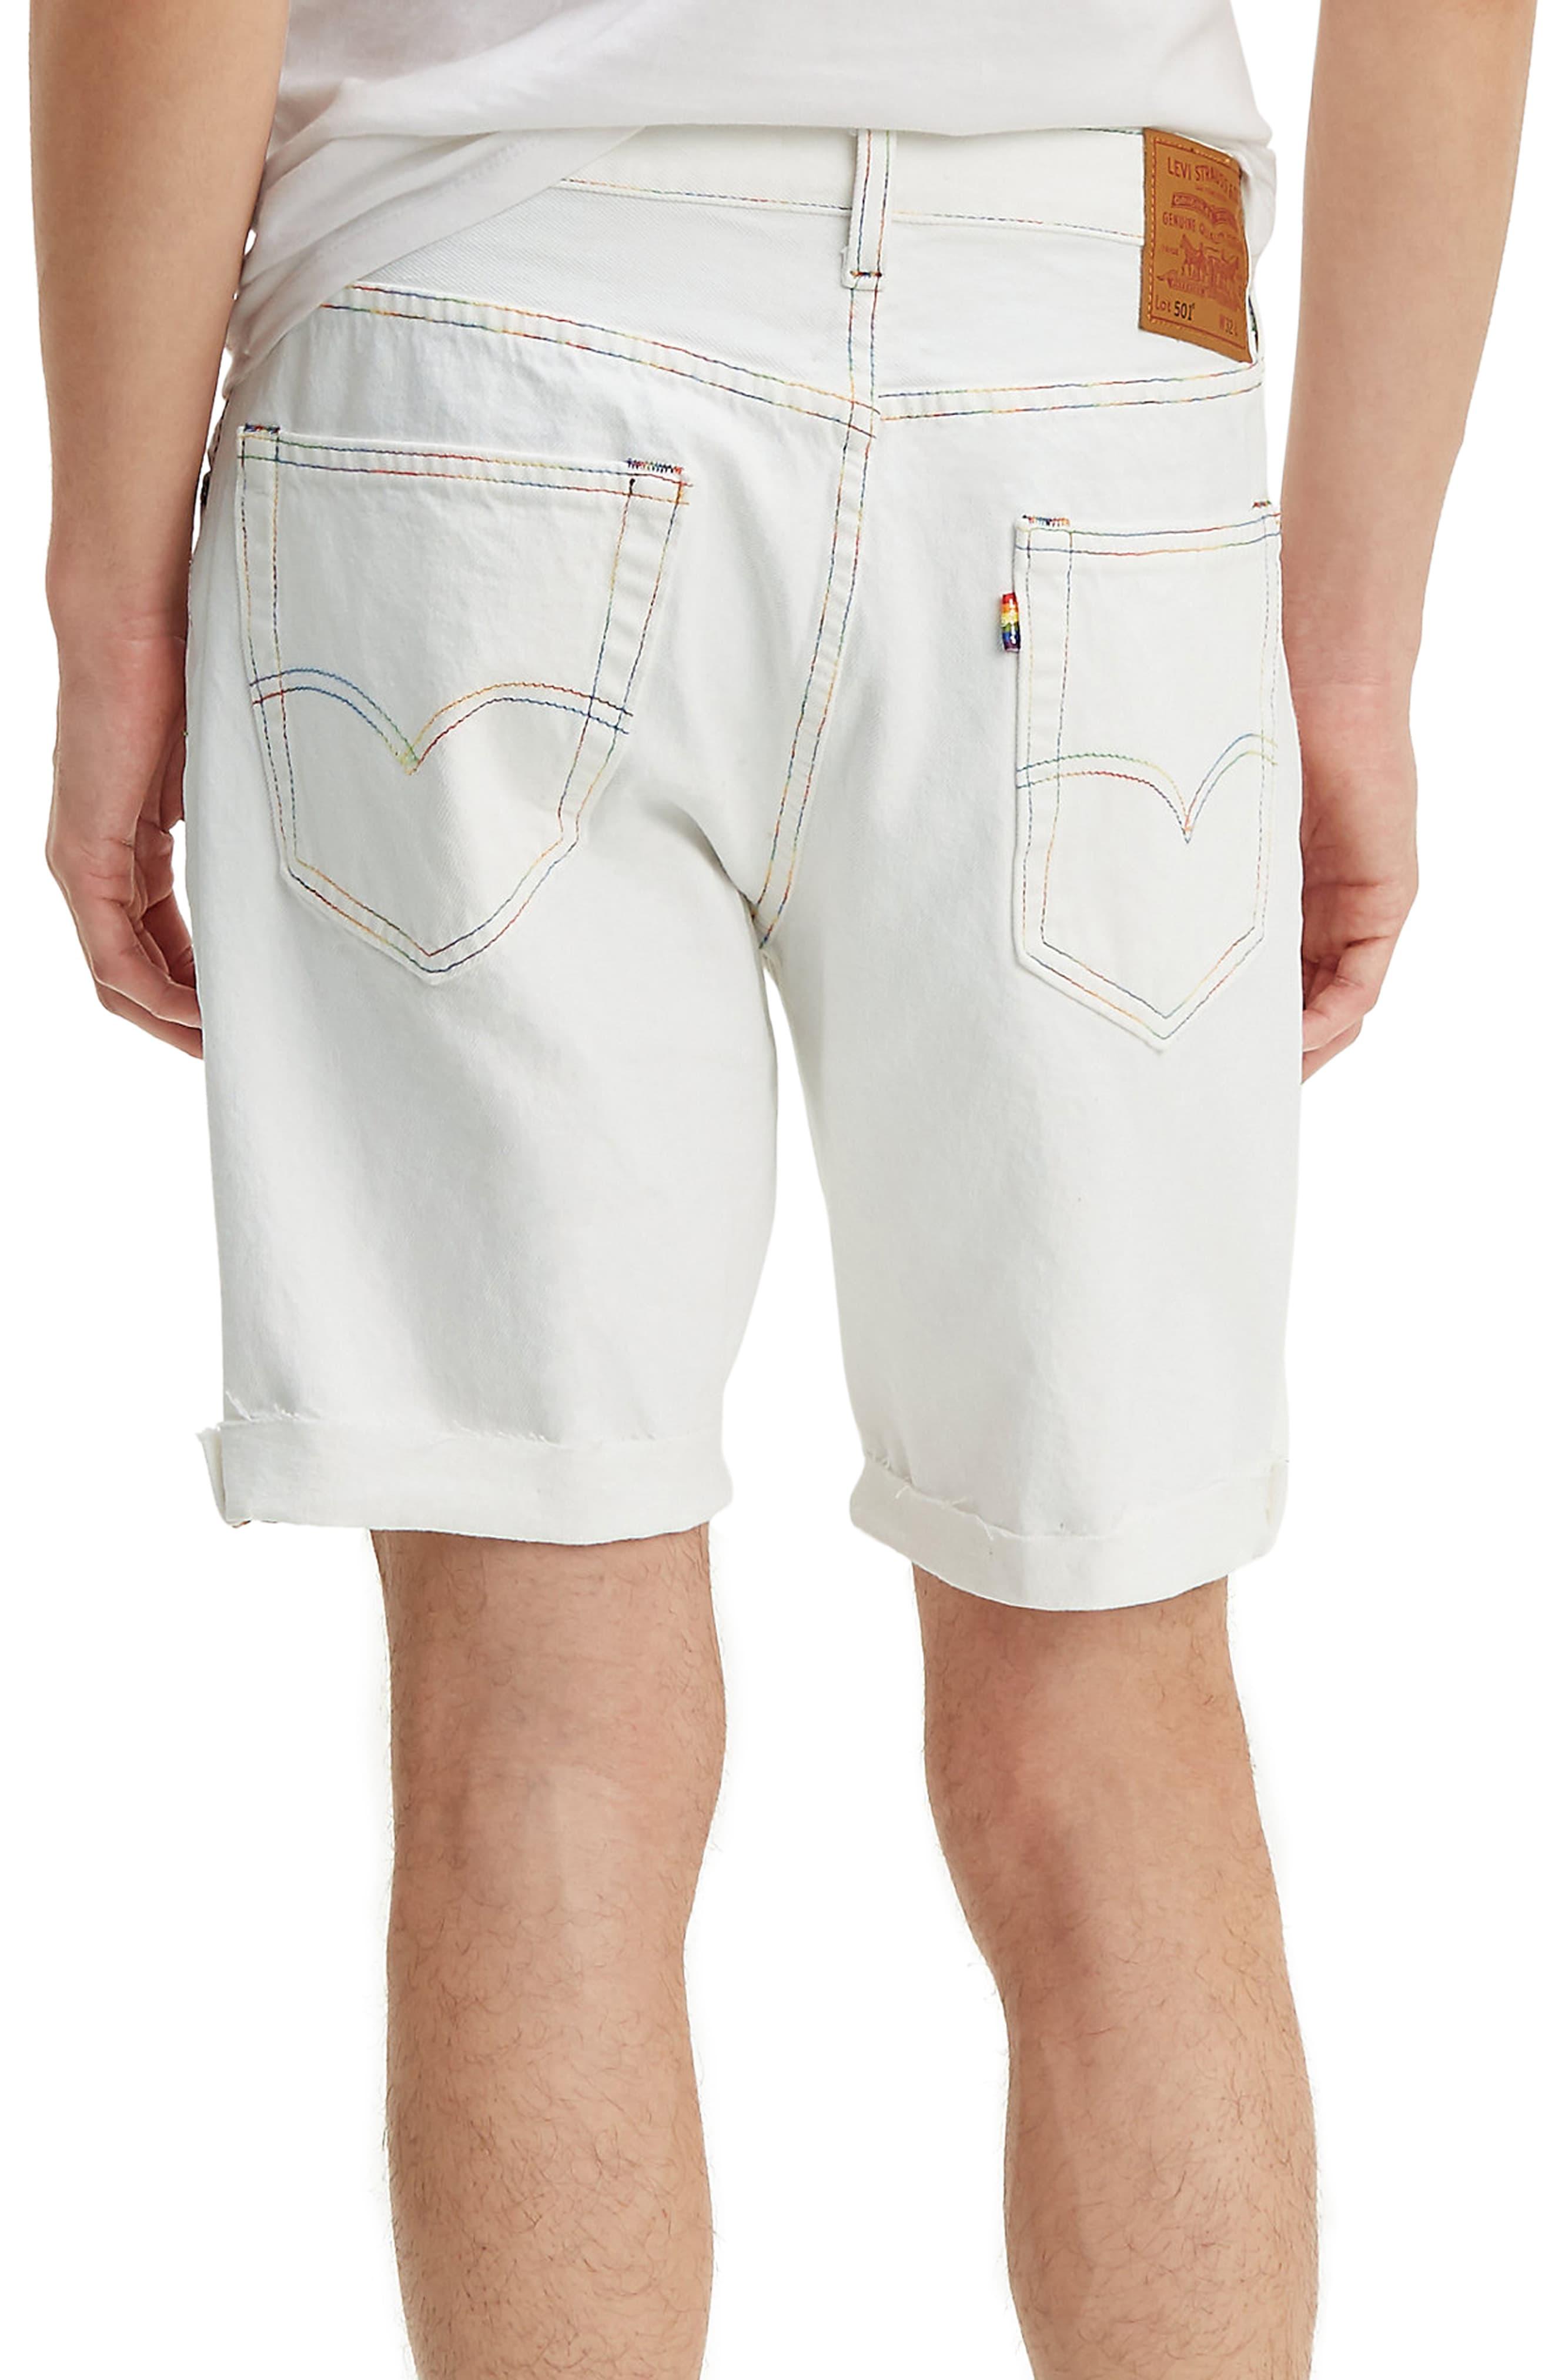 levis pride shorts